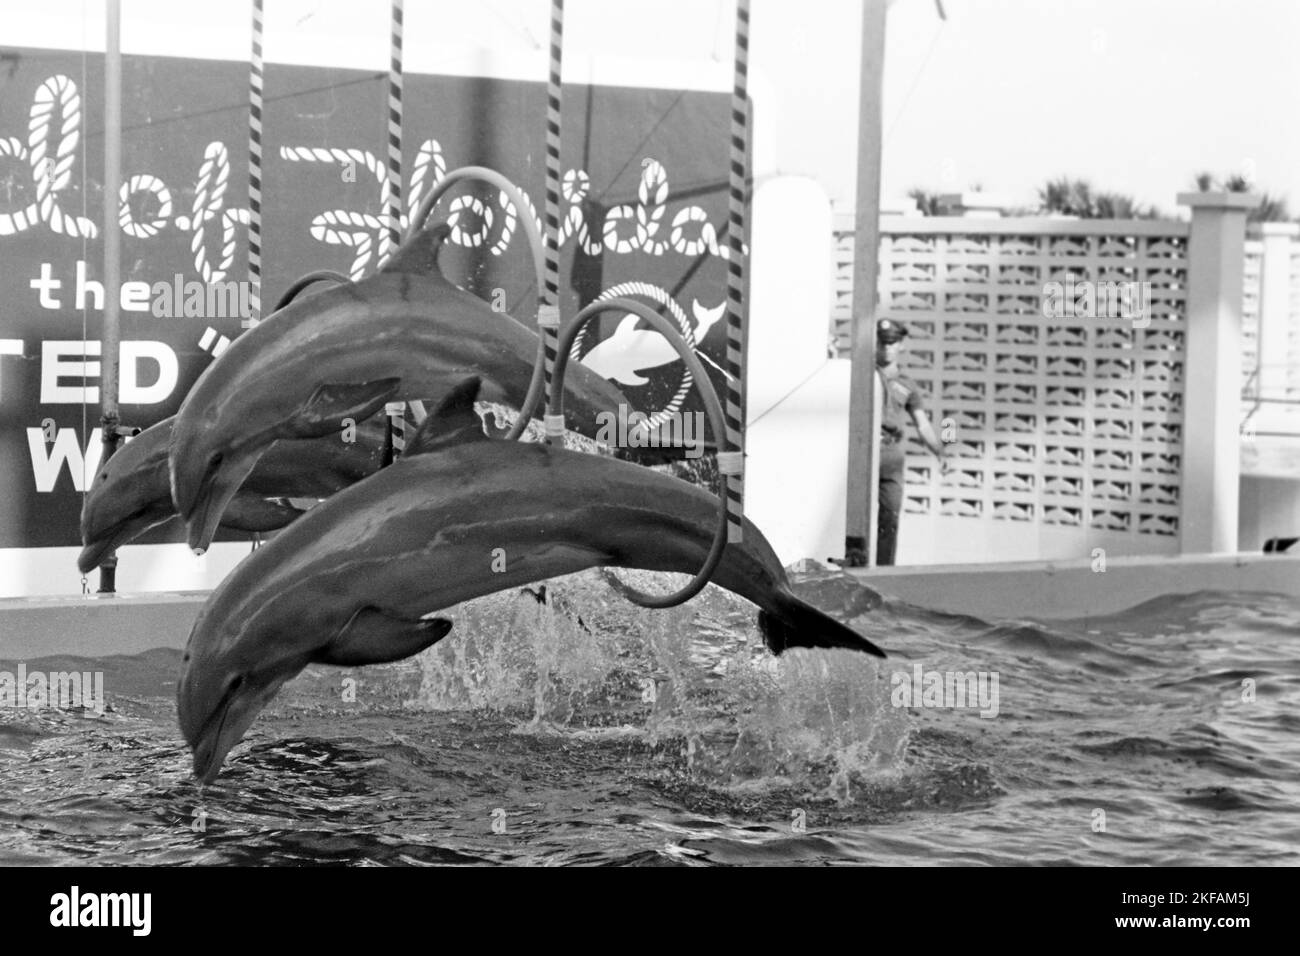 Delphine bei einer Tiershow im Seaquarium in Miami, Florida, USA 1965. Dolphins at an animal show at the Seaquarium in Miami, Florida, USA 1965. Stock Photo